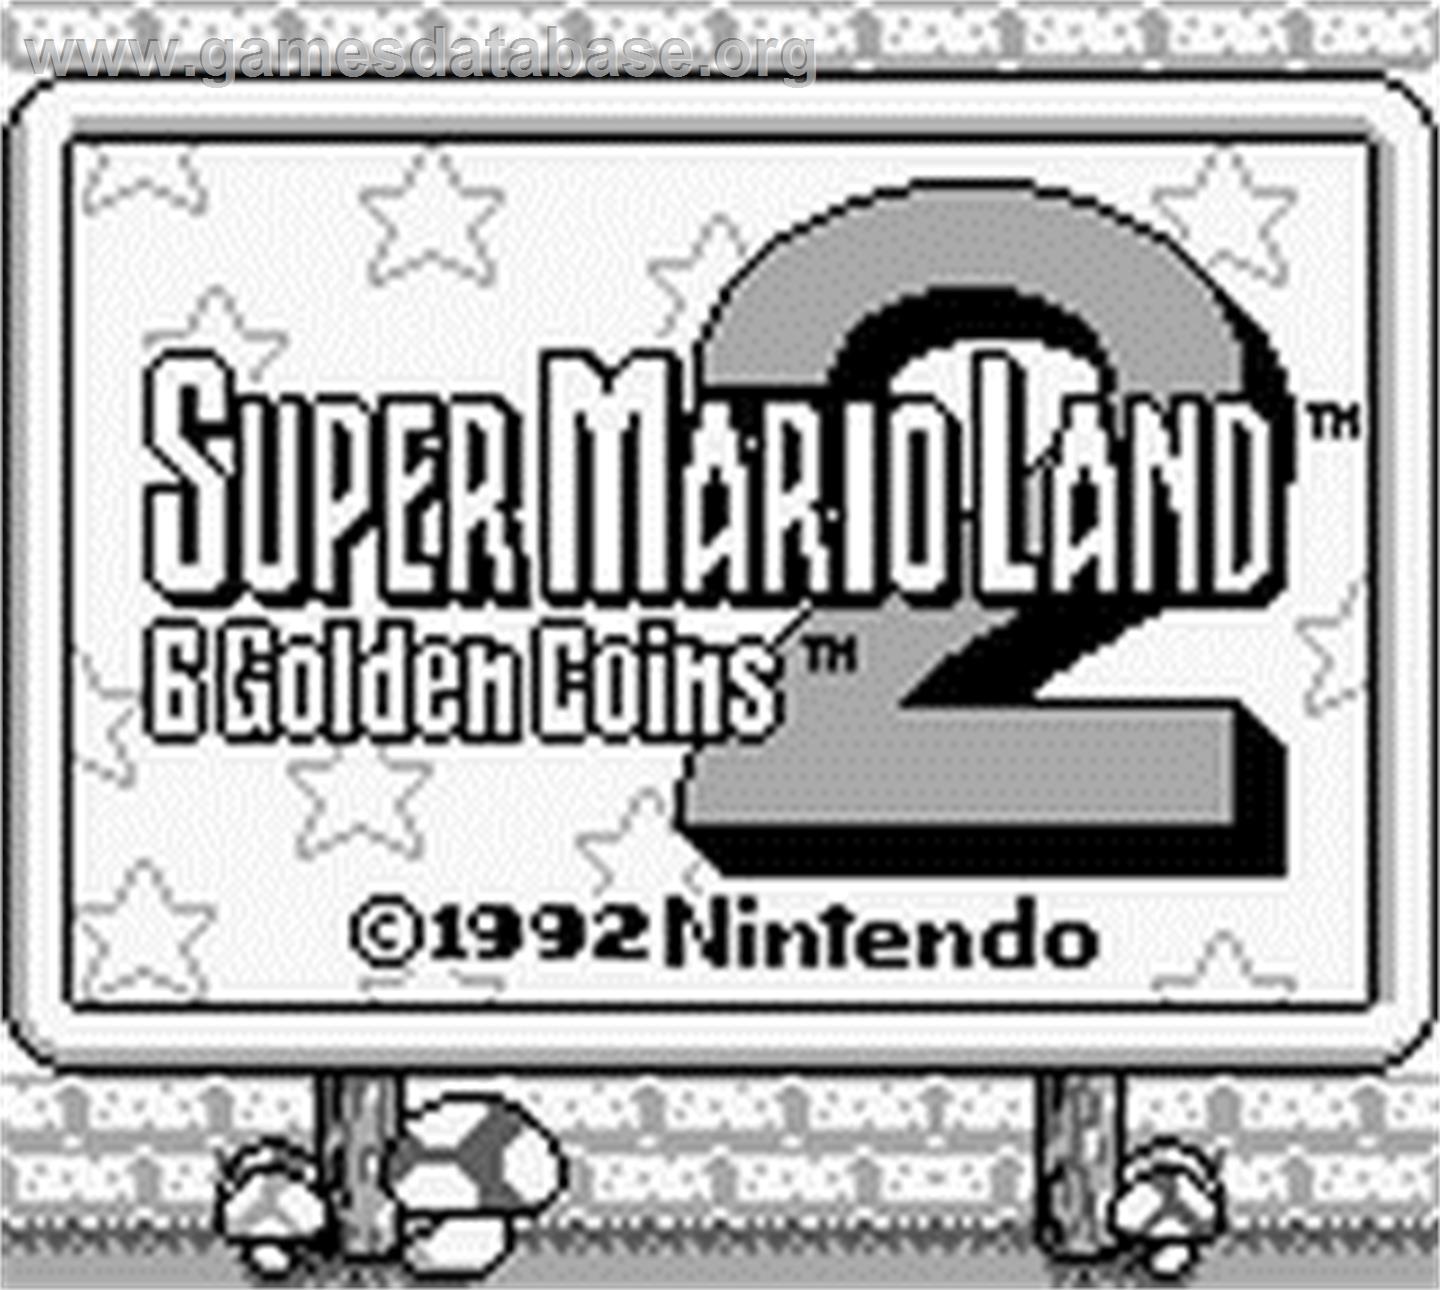 Super mario land 2 coins 6. Super Mario Land 2 6 Golden Coins. Super Mario Land 2 6 Golden Coins 1992. Super Mario Land 2 на super Nintendo. Super Mario Land 2 6 Golden Coins отзывы.